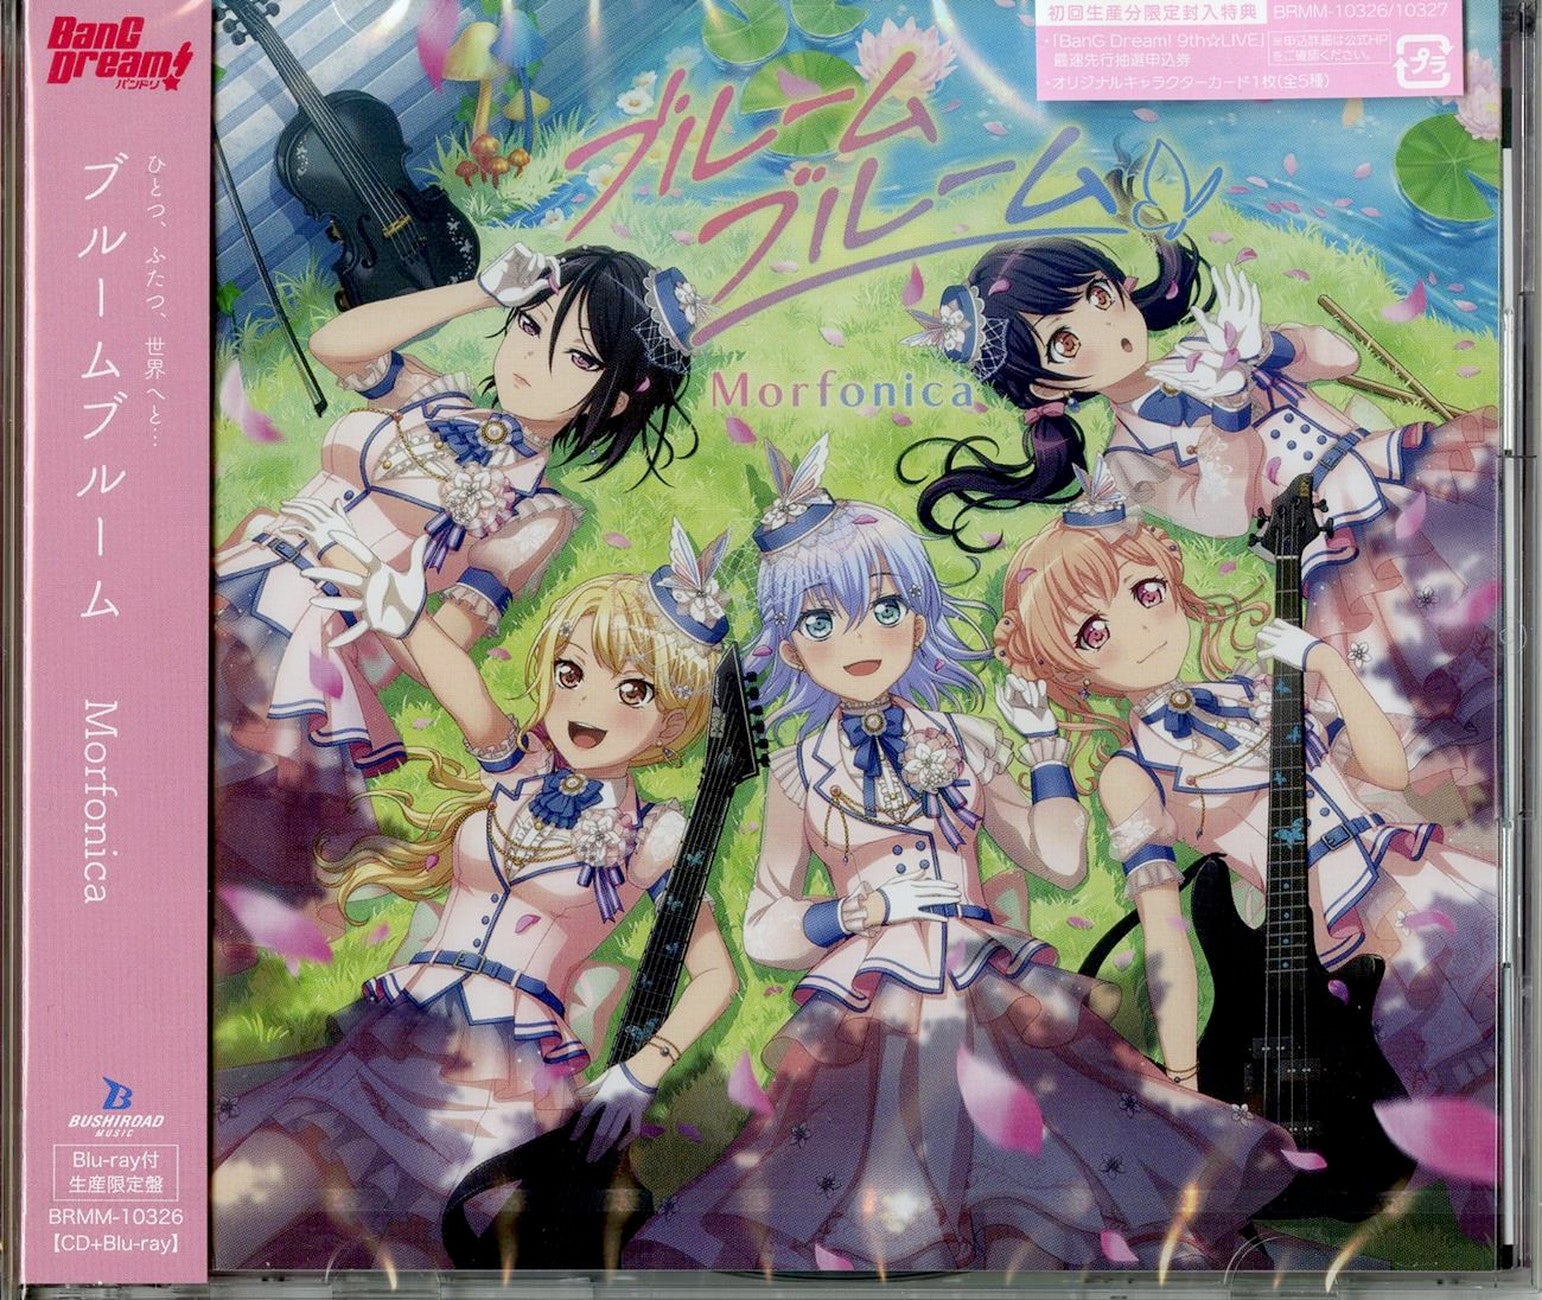 Bang Dream! - Morfonica Bloom Bloom - Japan CD+Blu-ray Limited